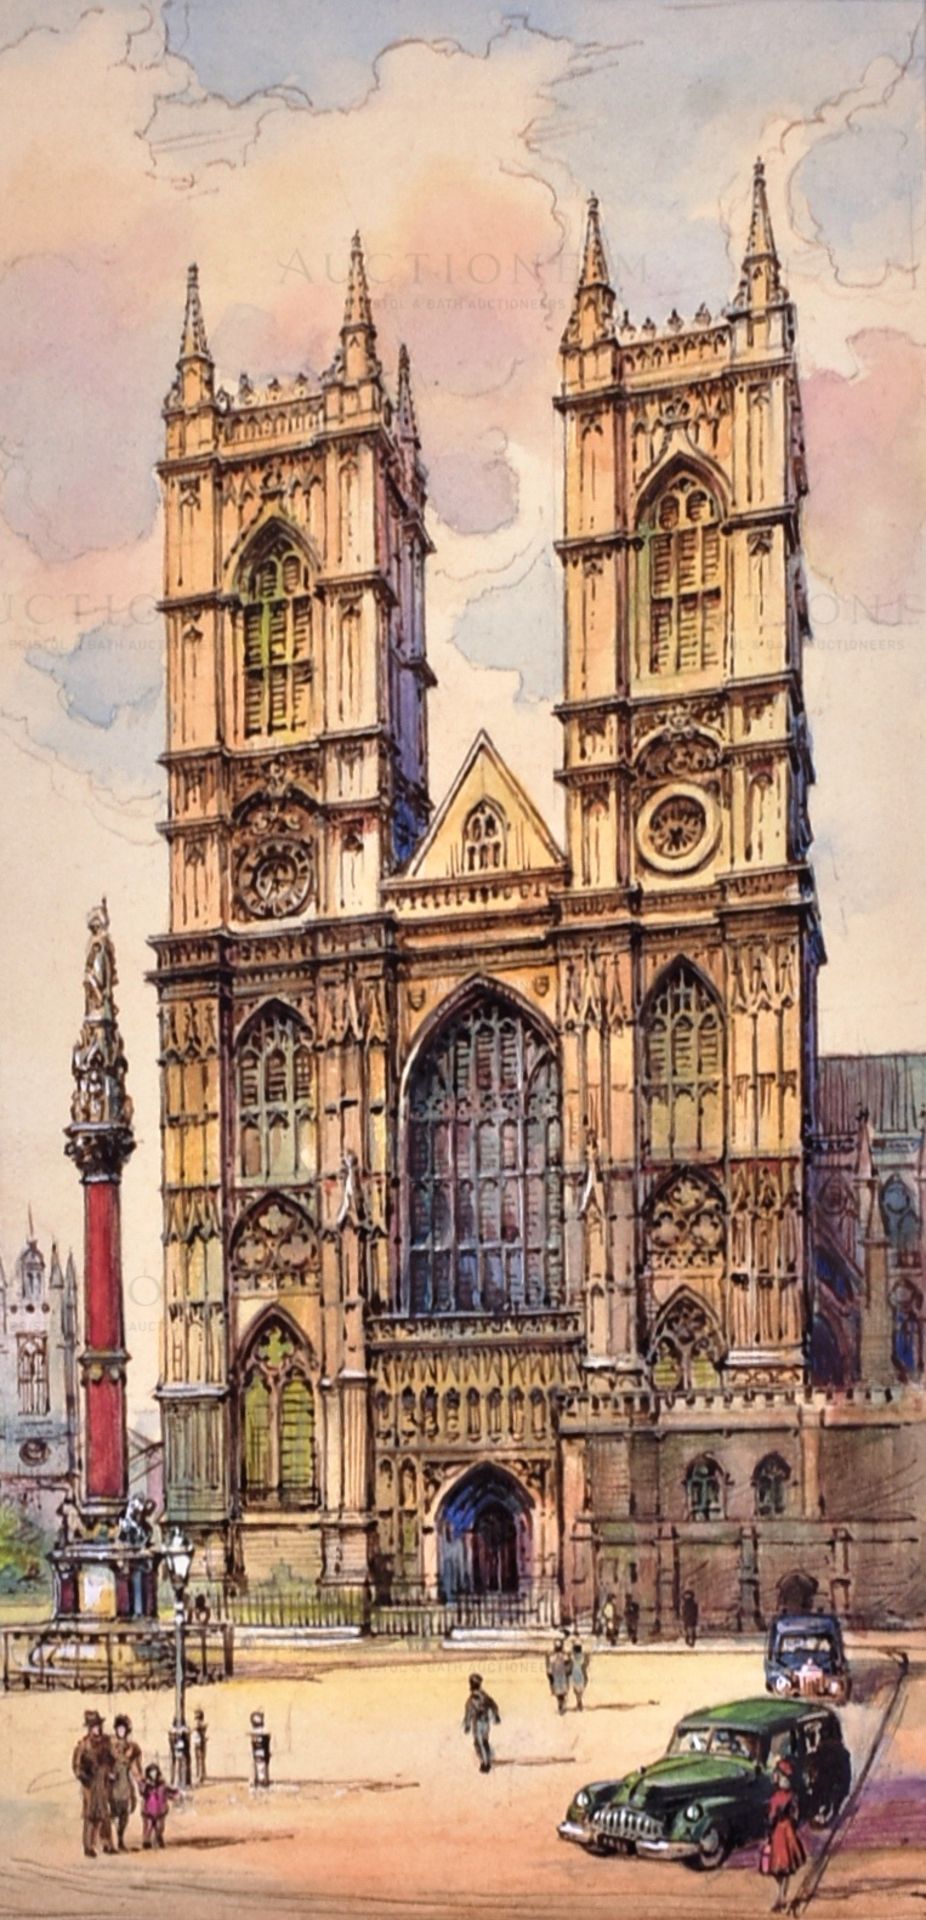 MARDON SON & HALL - LONDON - ORIGINAL CIGARETTE CARD ARTWORK - Image 5 of 5